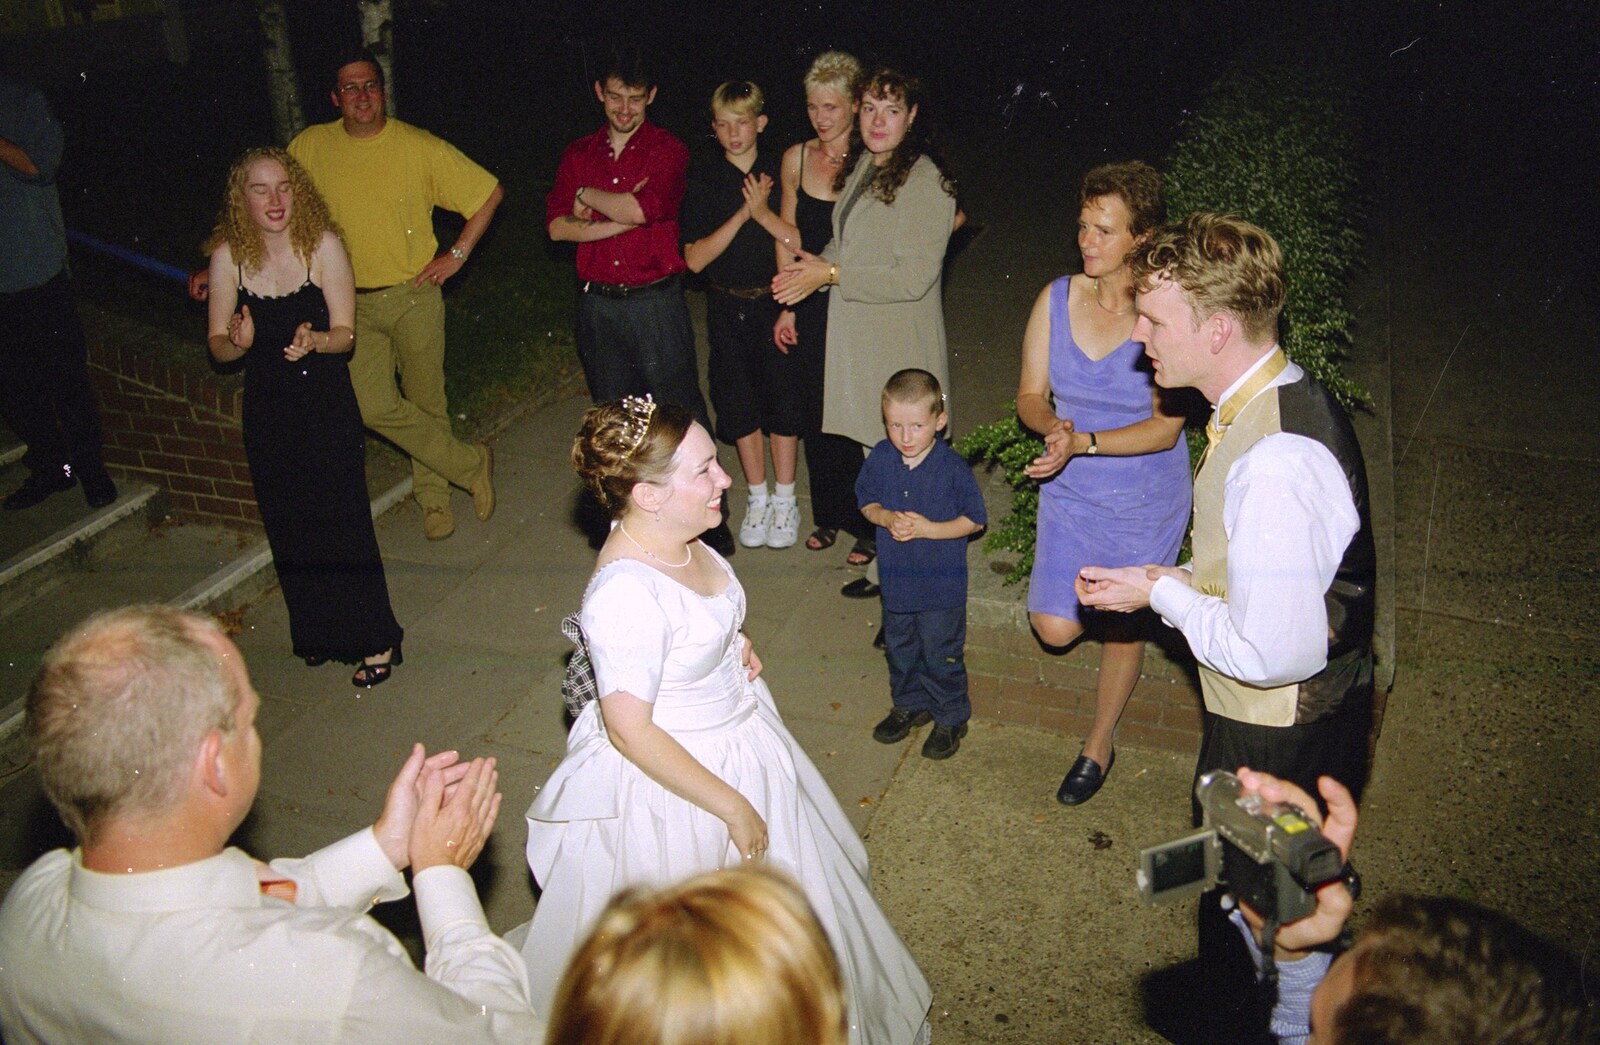 Lesley heads down the social club steps from Joe and Lesley's CISU Wedding, Ipswich, Suffolk - 30th July 1998